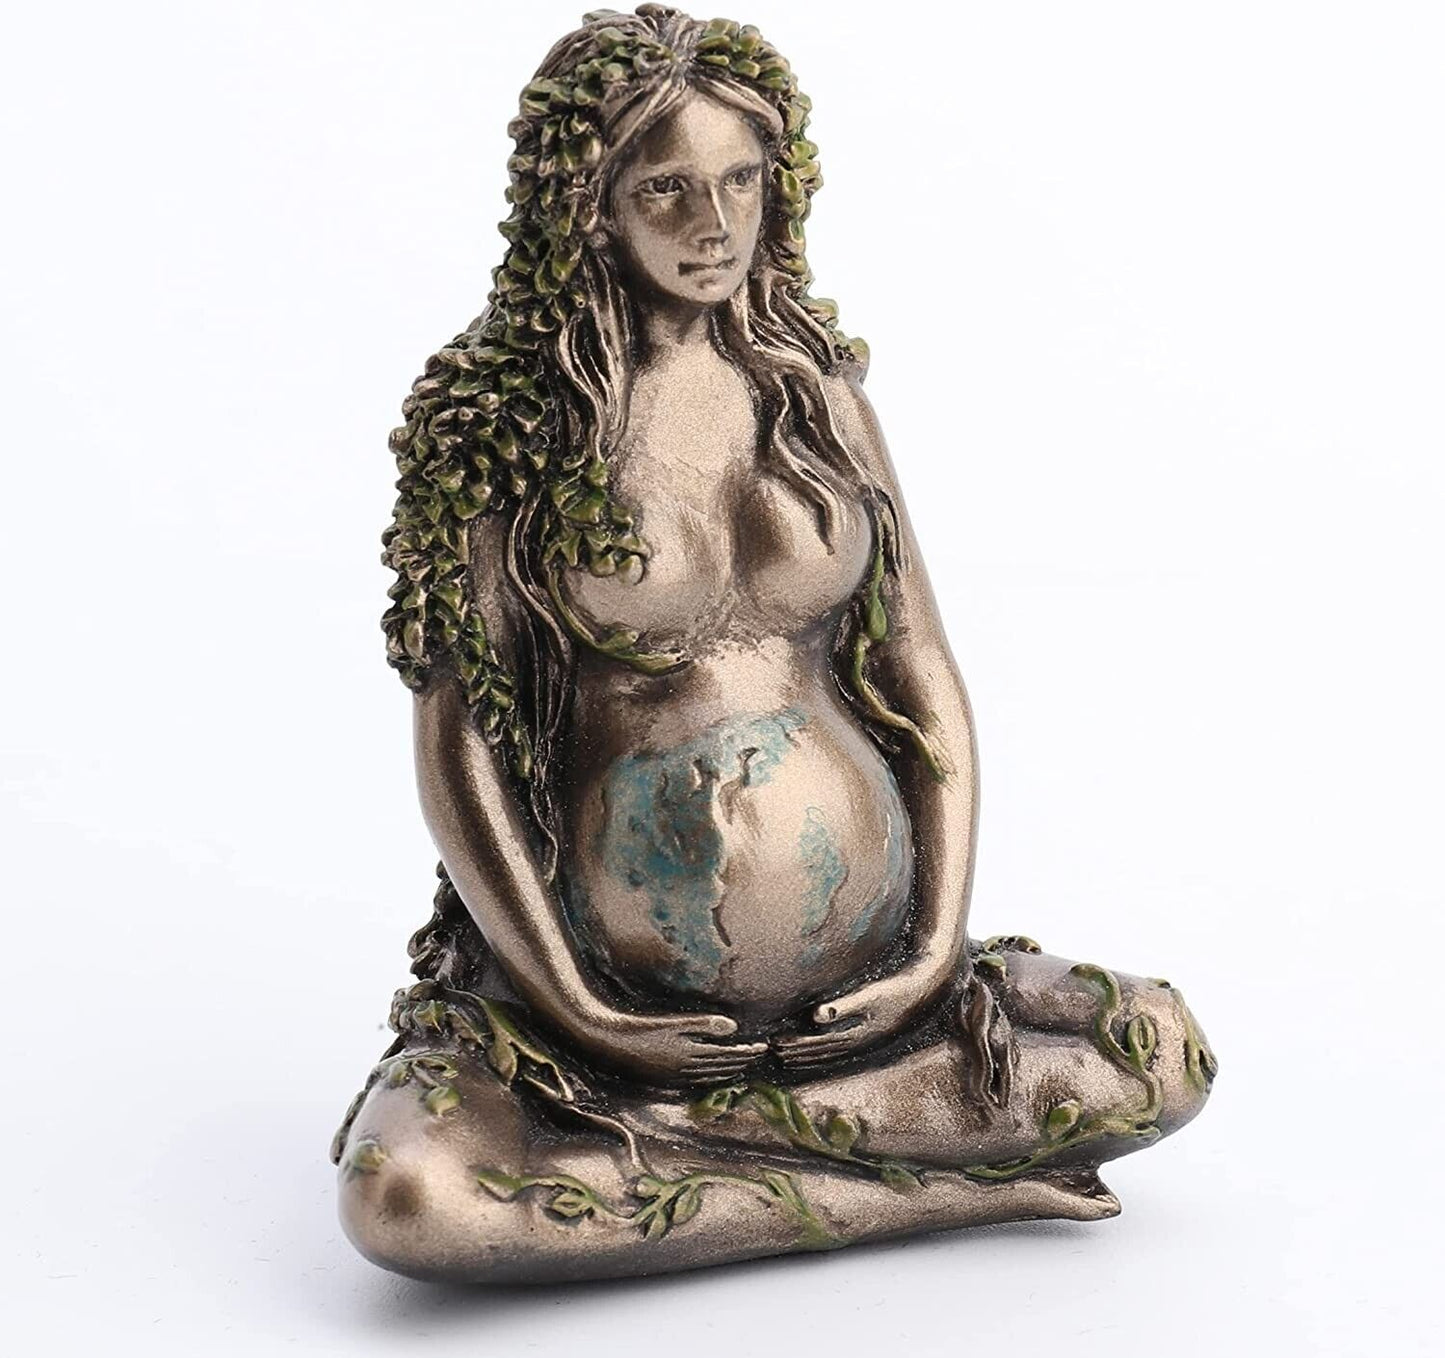 Mother Earth Gaia Sitting Lotus Pose